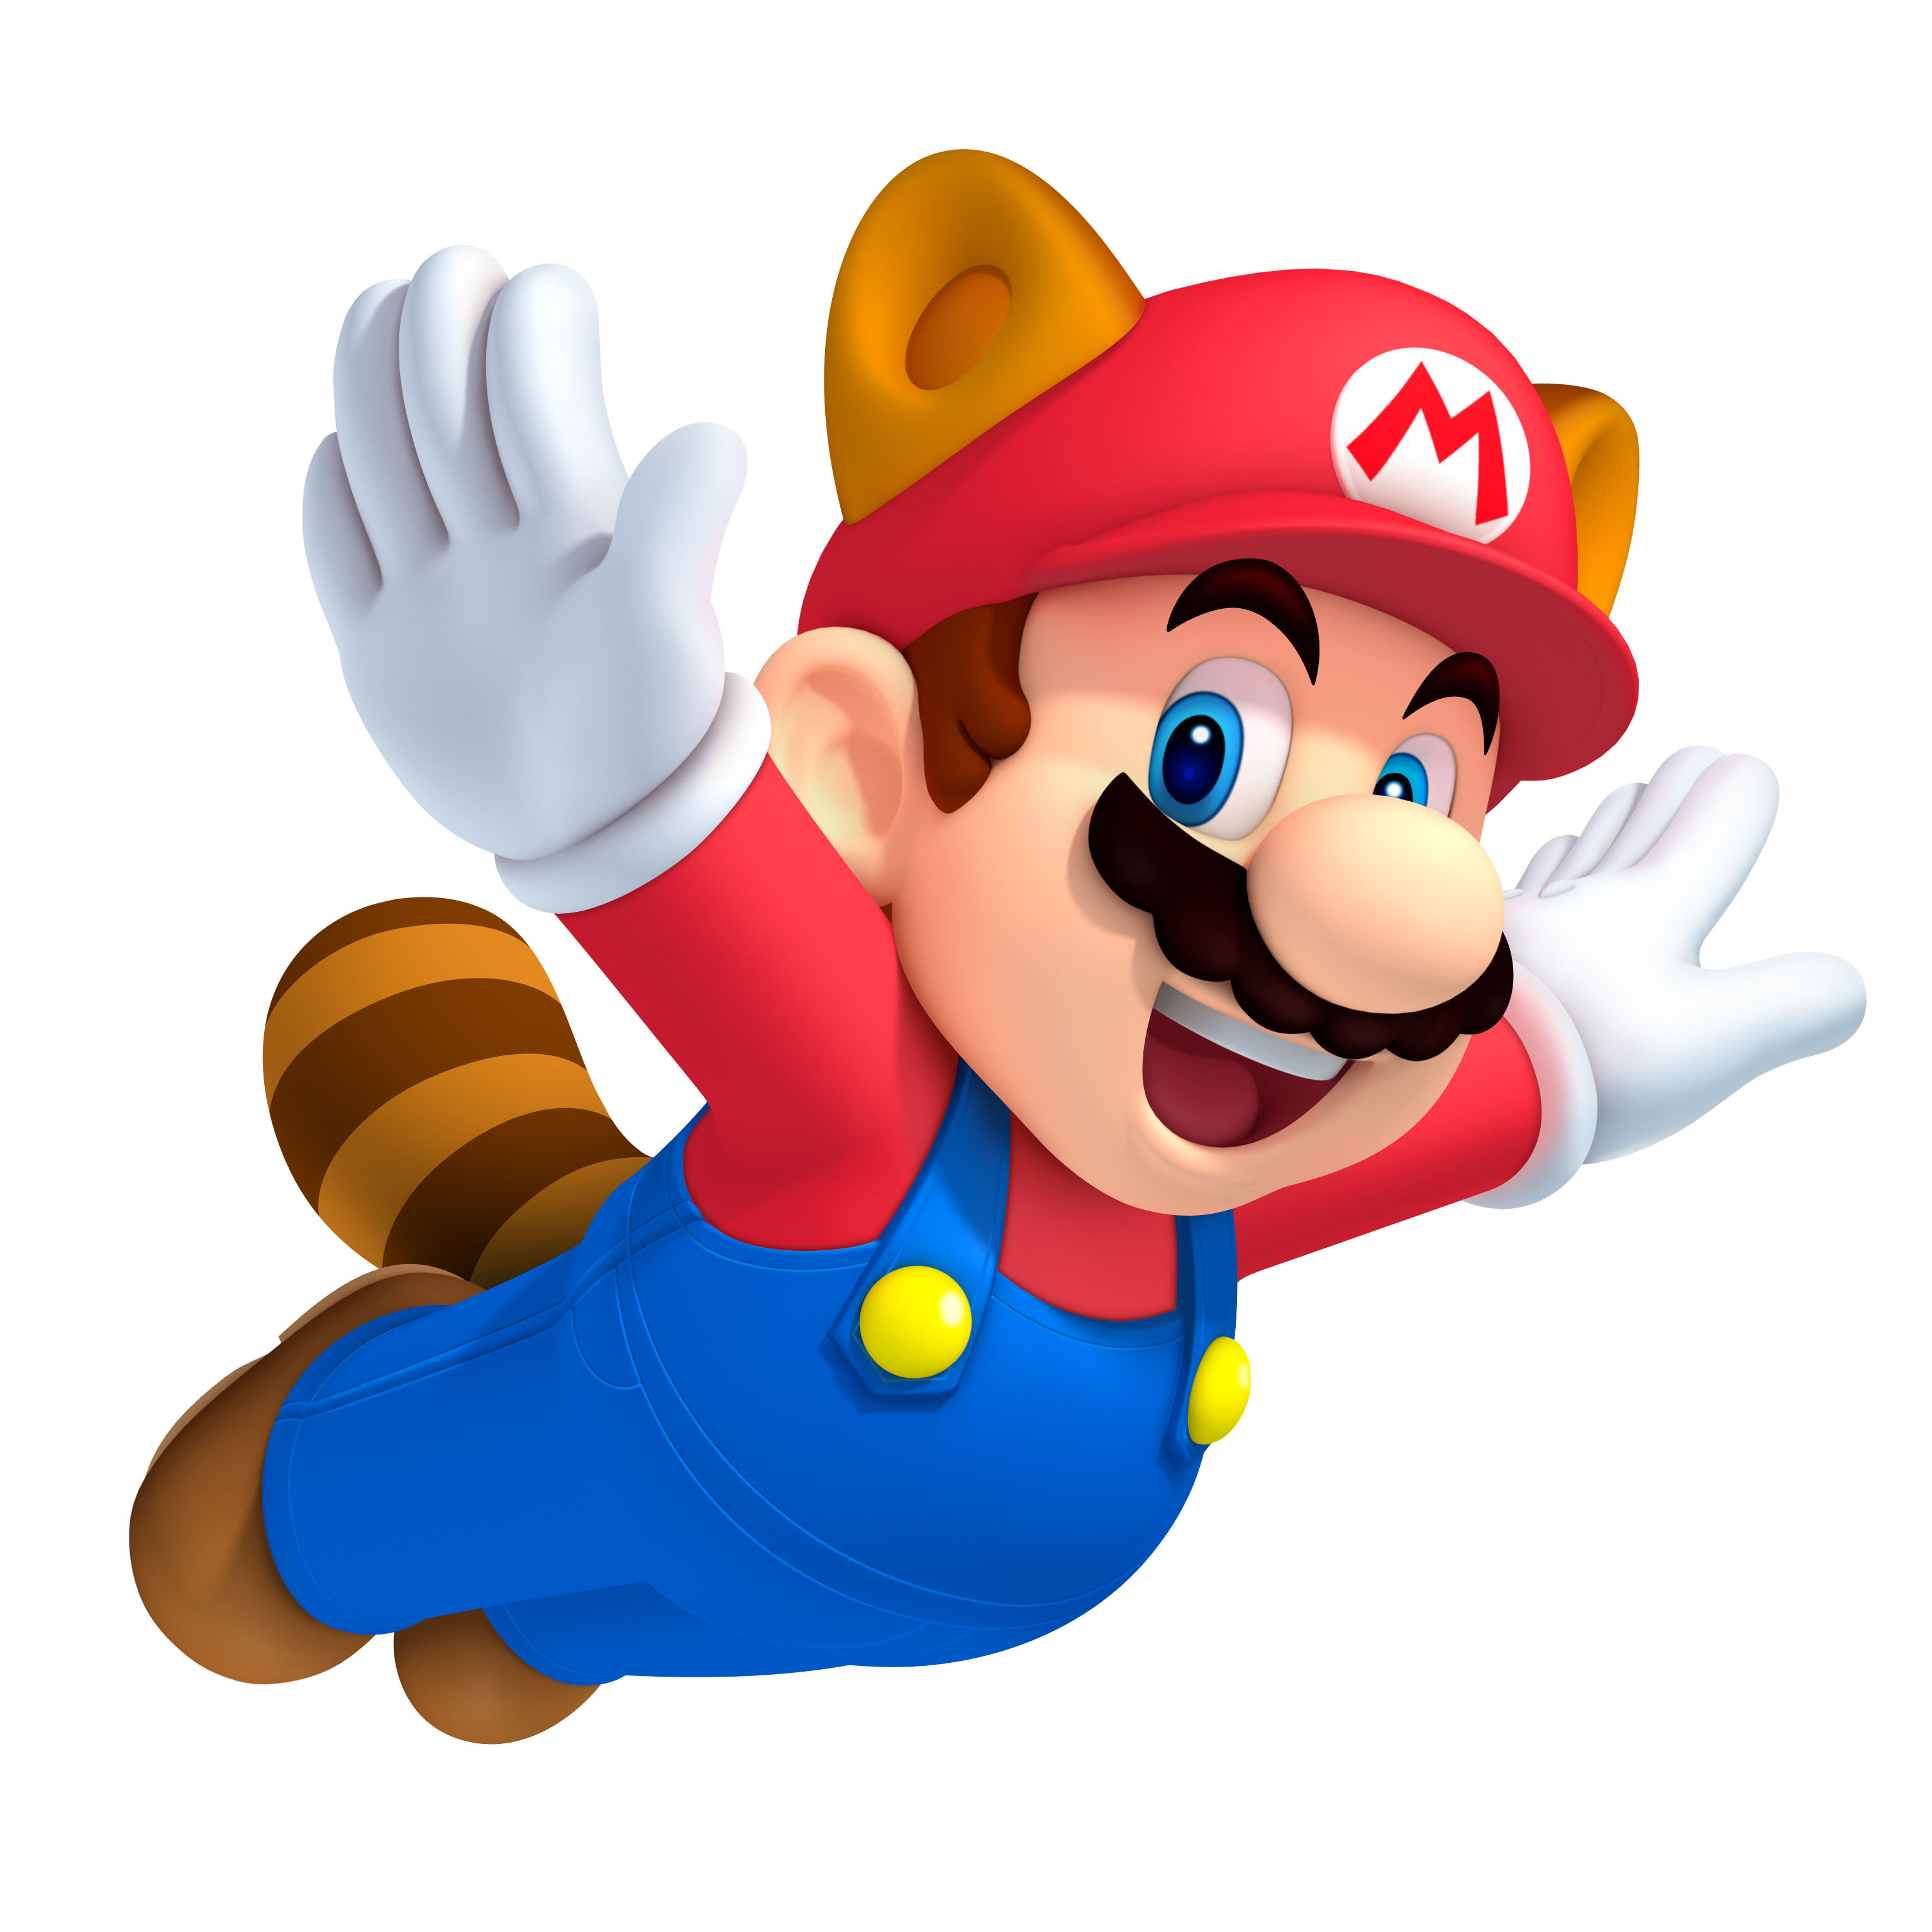 Mario bros theme. Супер Марио. Супер Марио БРОС. Супер Марио БРОС Марио. Марио персонажи.